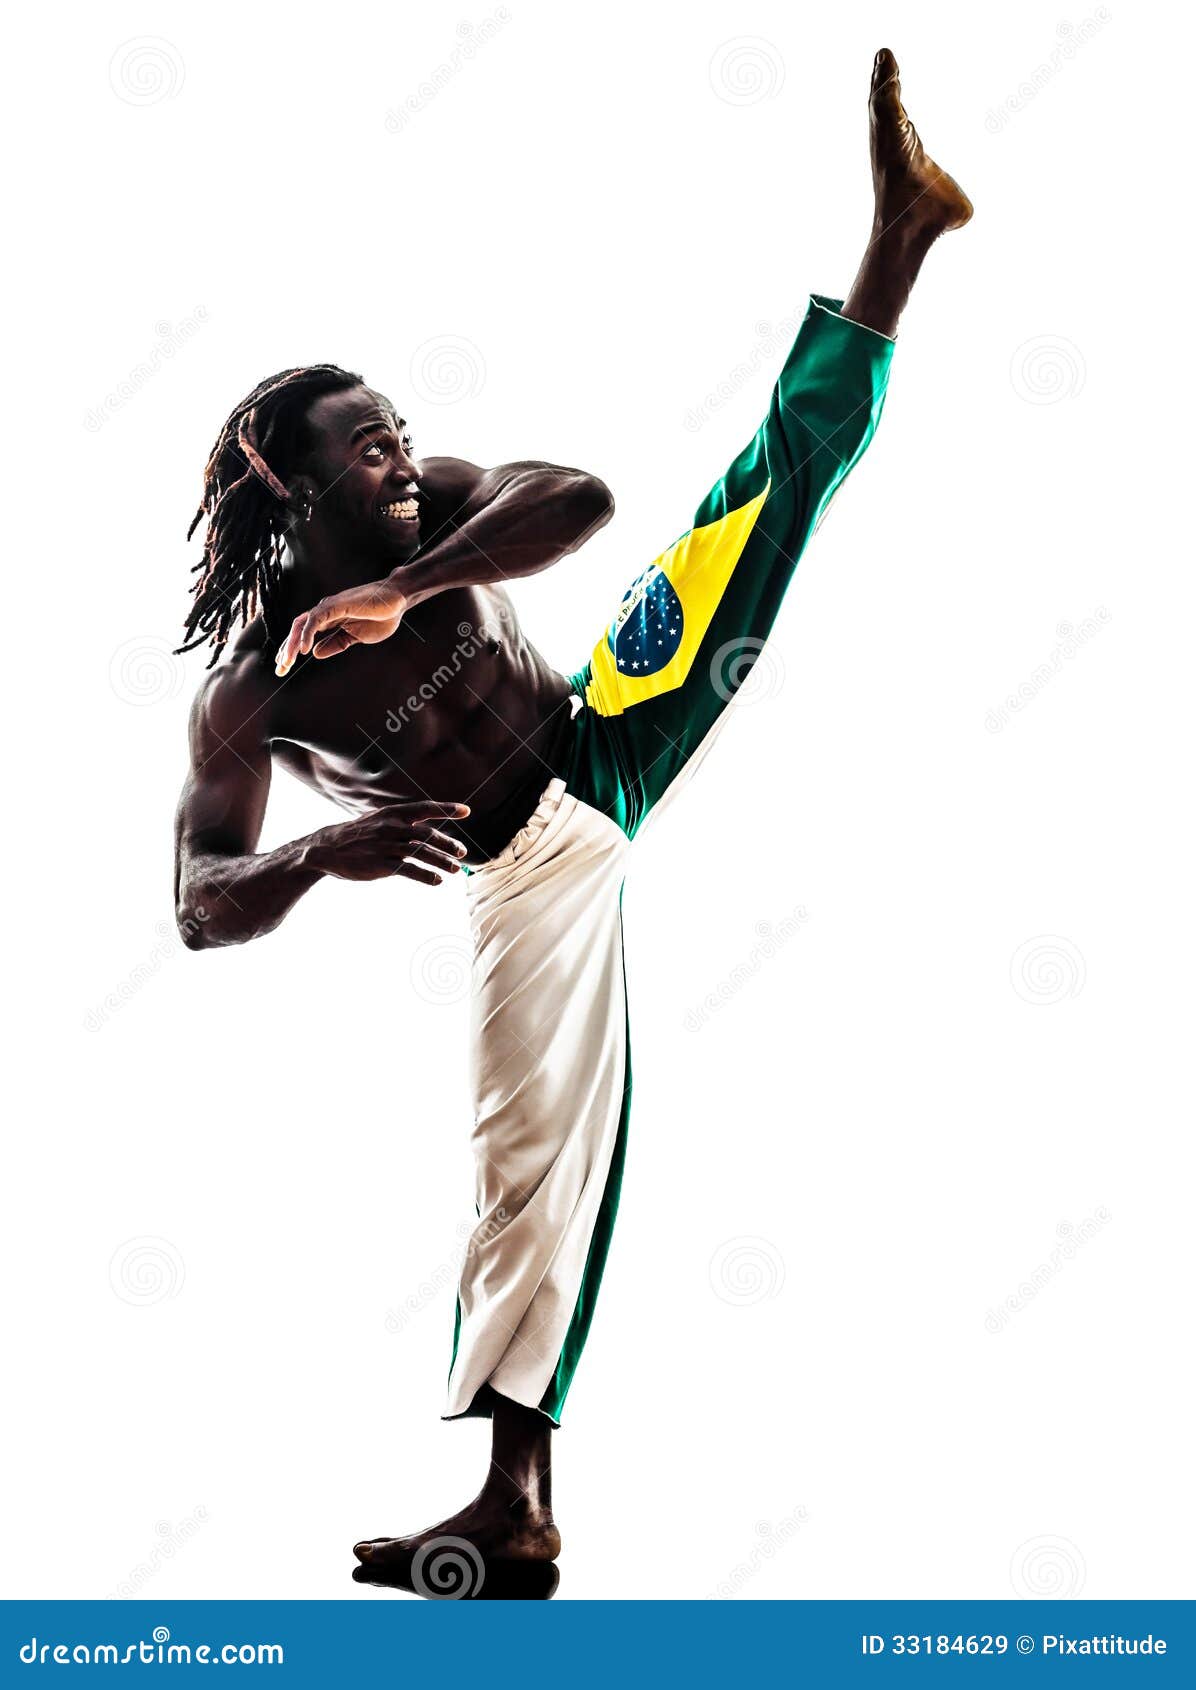 Sinu rage amp vs mandeok capoeira who win ? (I would say mandeok mid diff)  : r/lookismcomic